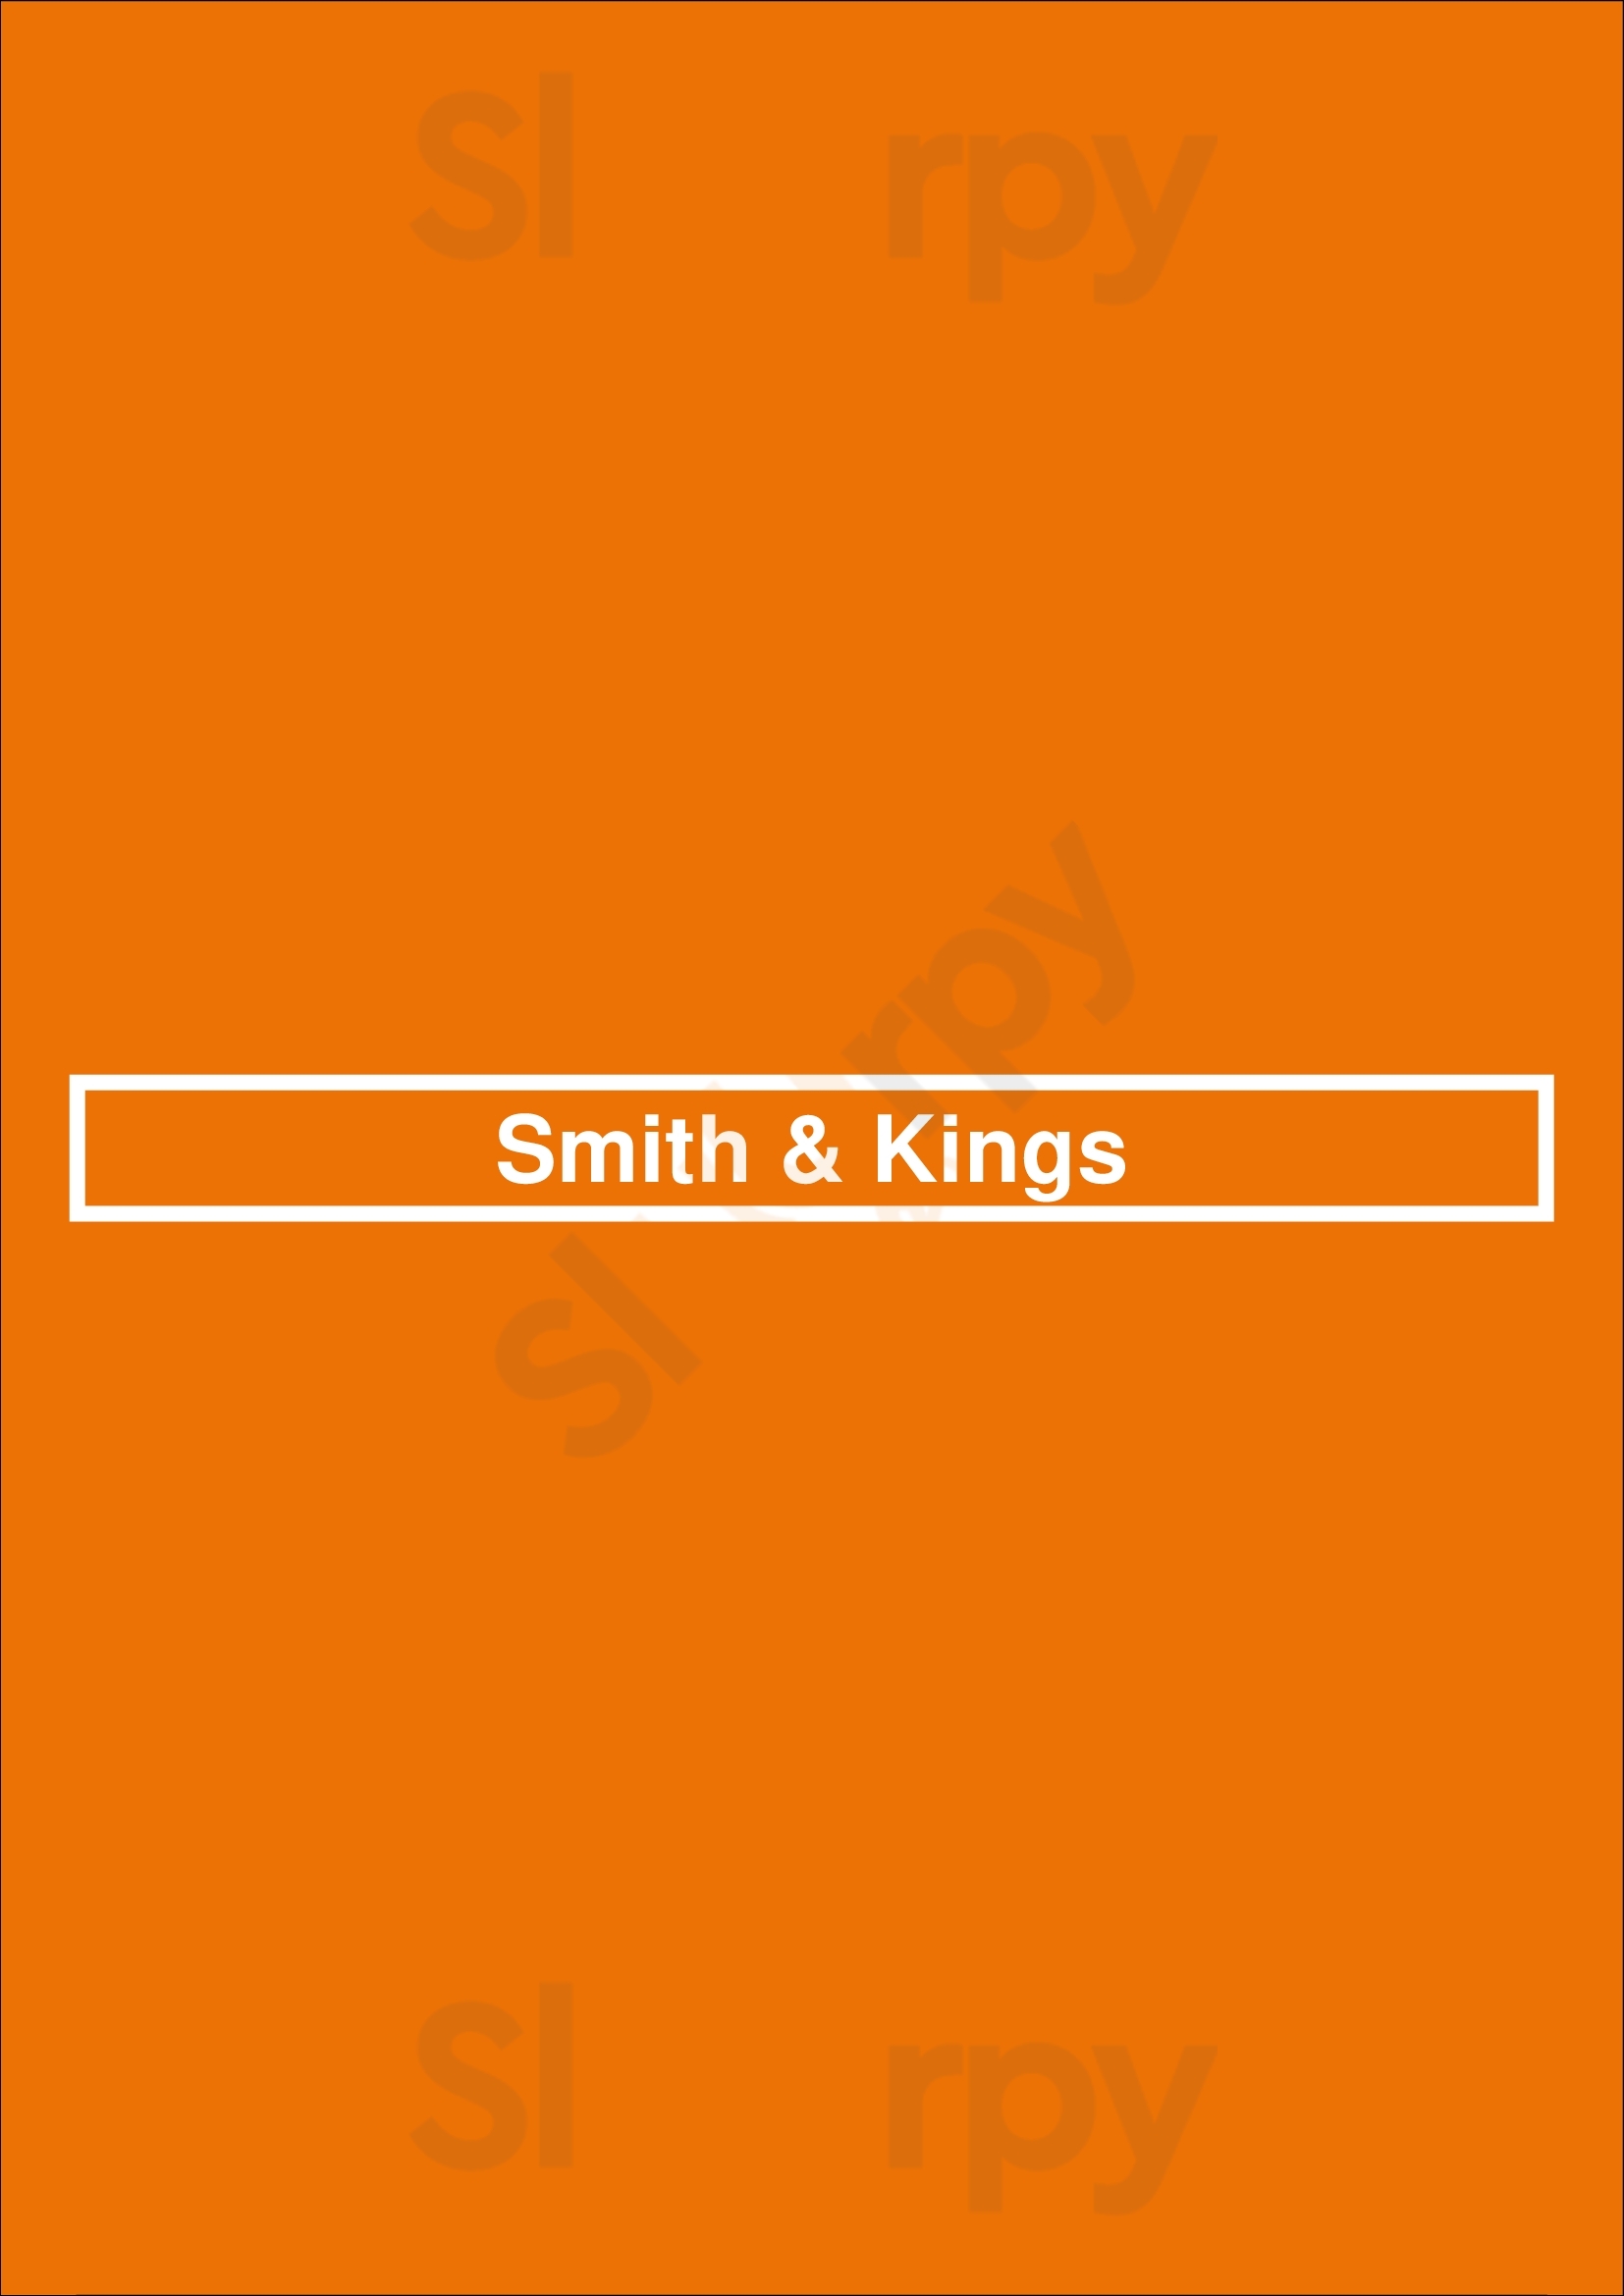 Smith & Kings Honolulu Menu - 1